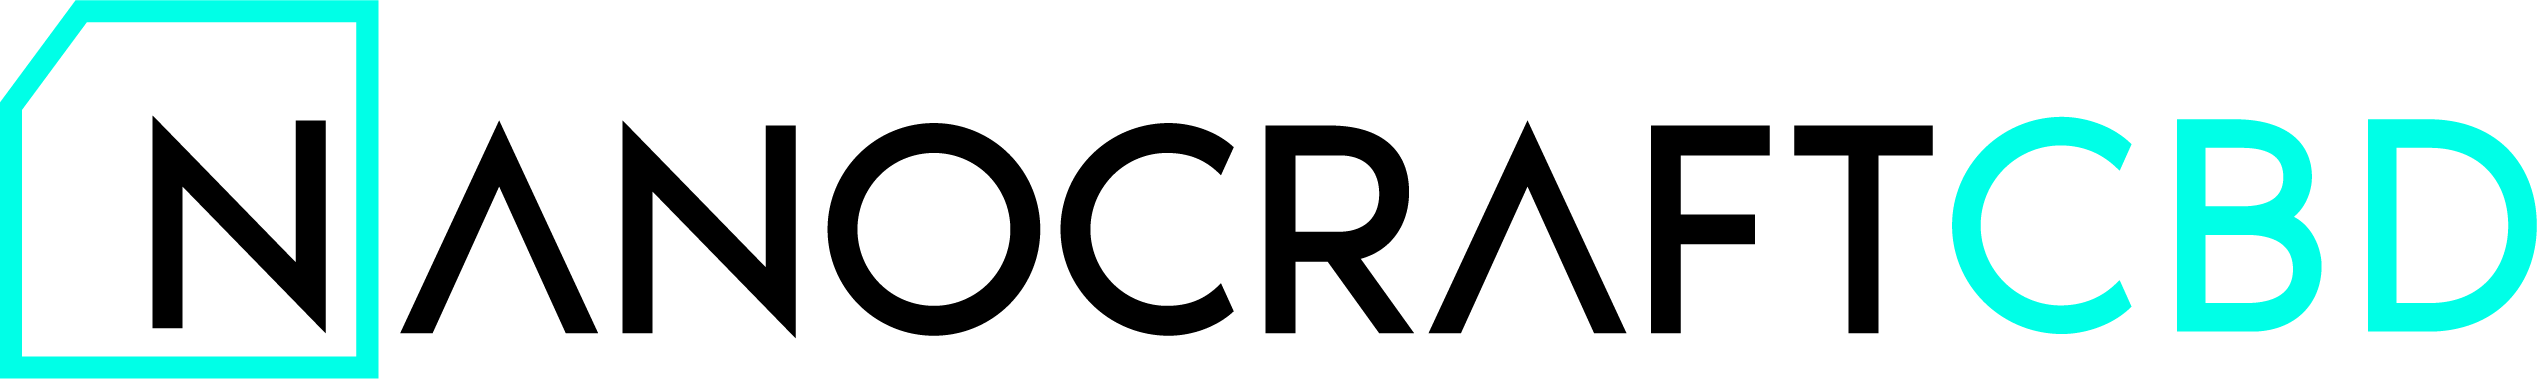 Nanocraft cbd logo